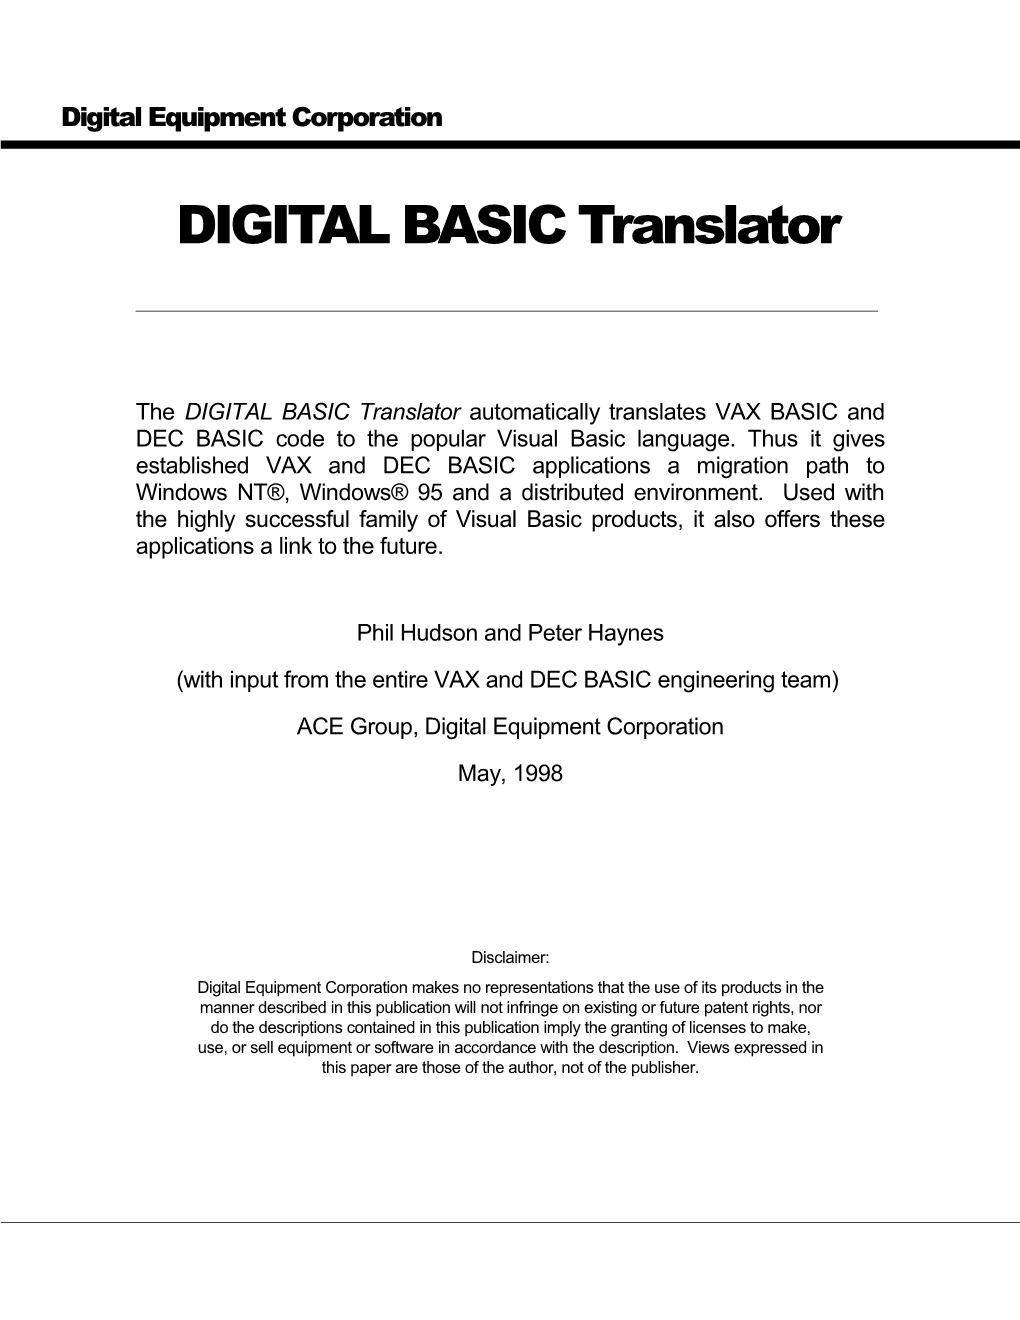 DIGITAL BASIC Translator